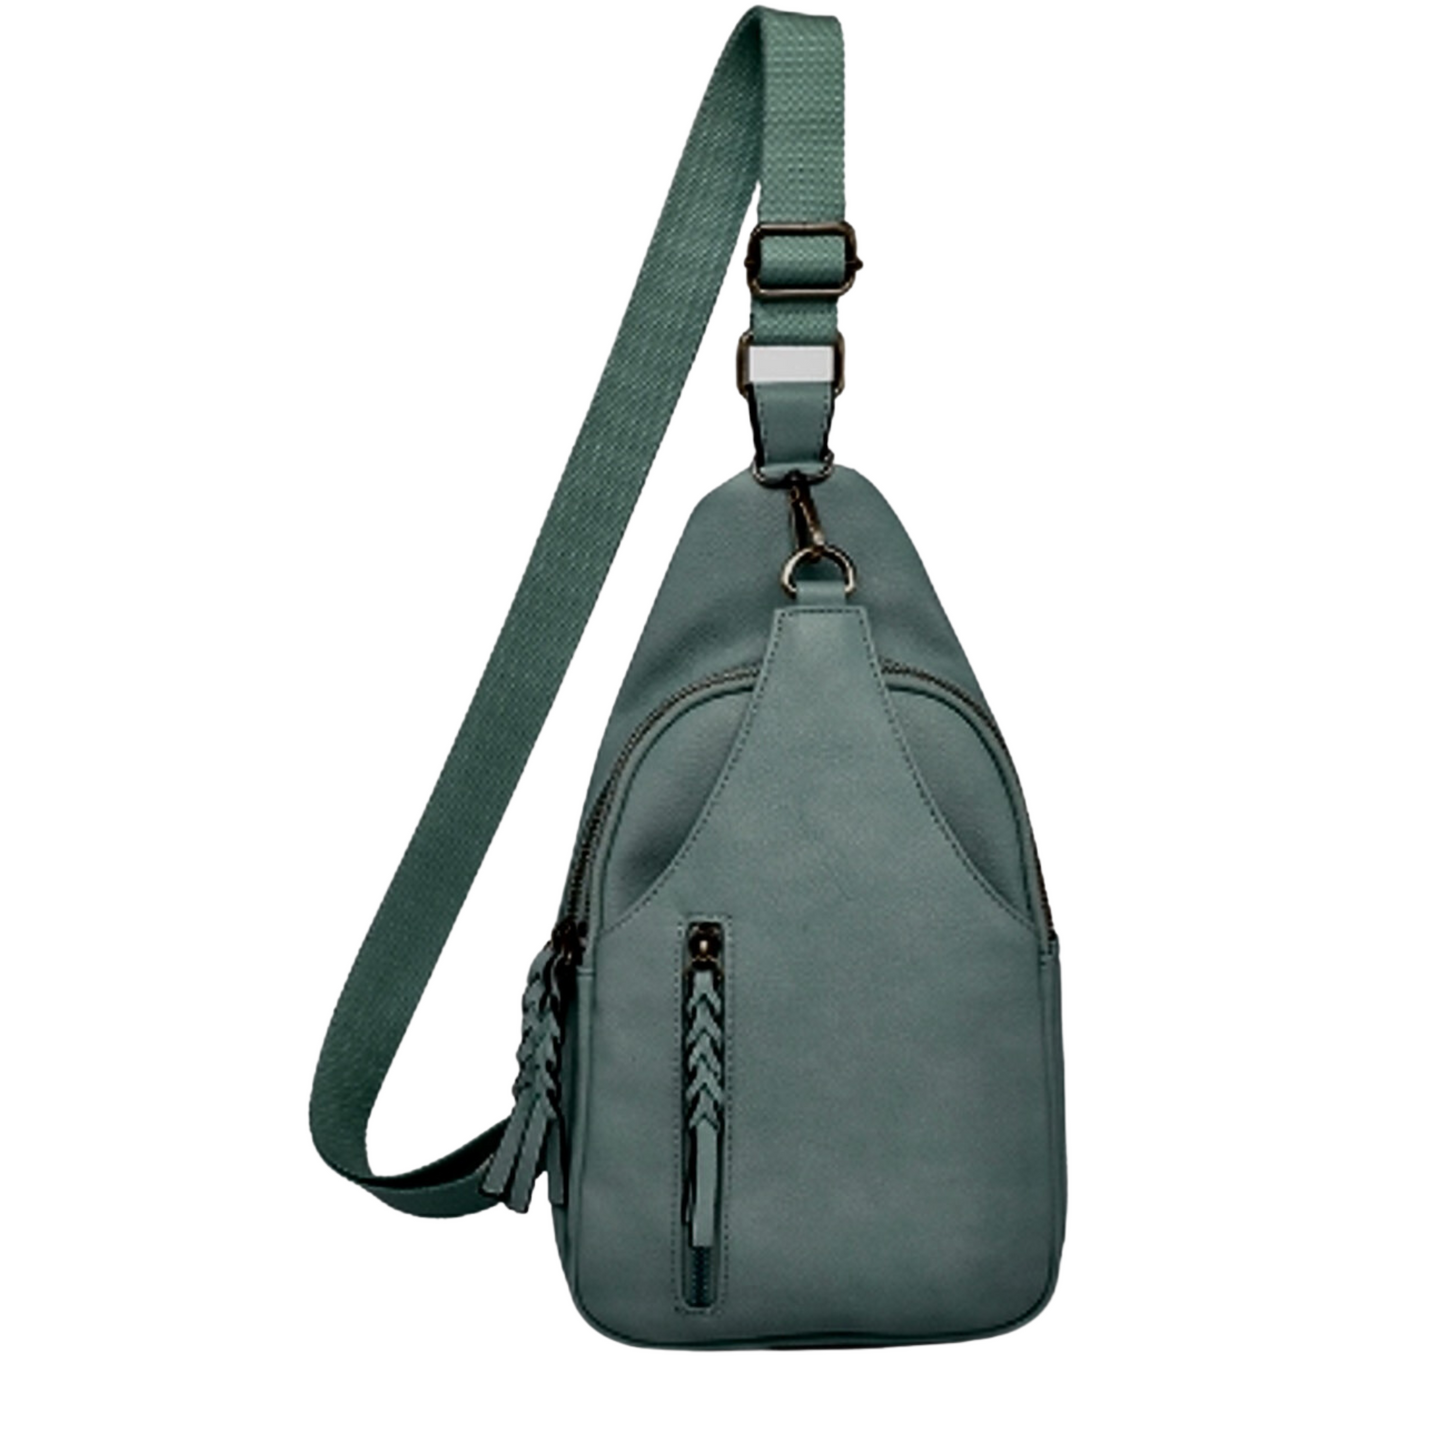 Teal grey crossbody sling bag